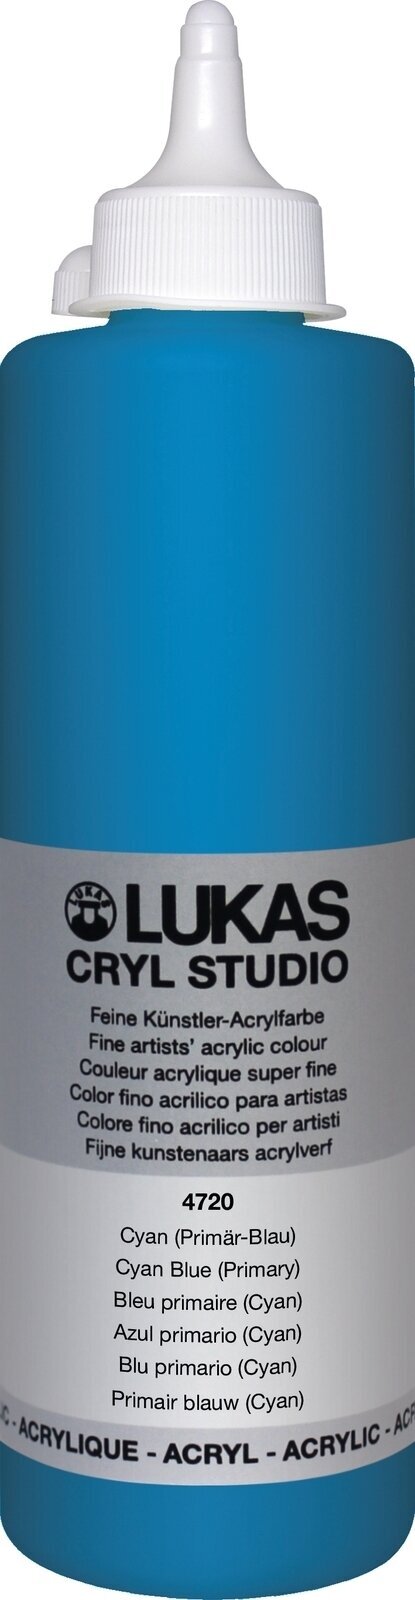 Acrylfarbe Lukas Cryl Studio Acrylfarbe 500 ml Cyan Blue (Primary)